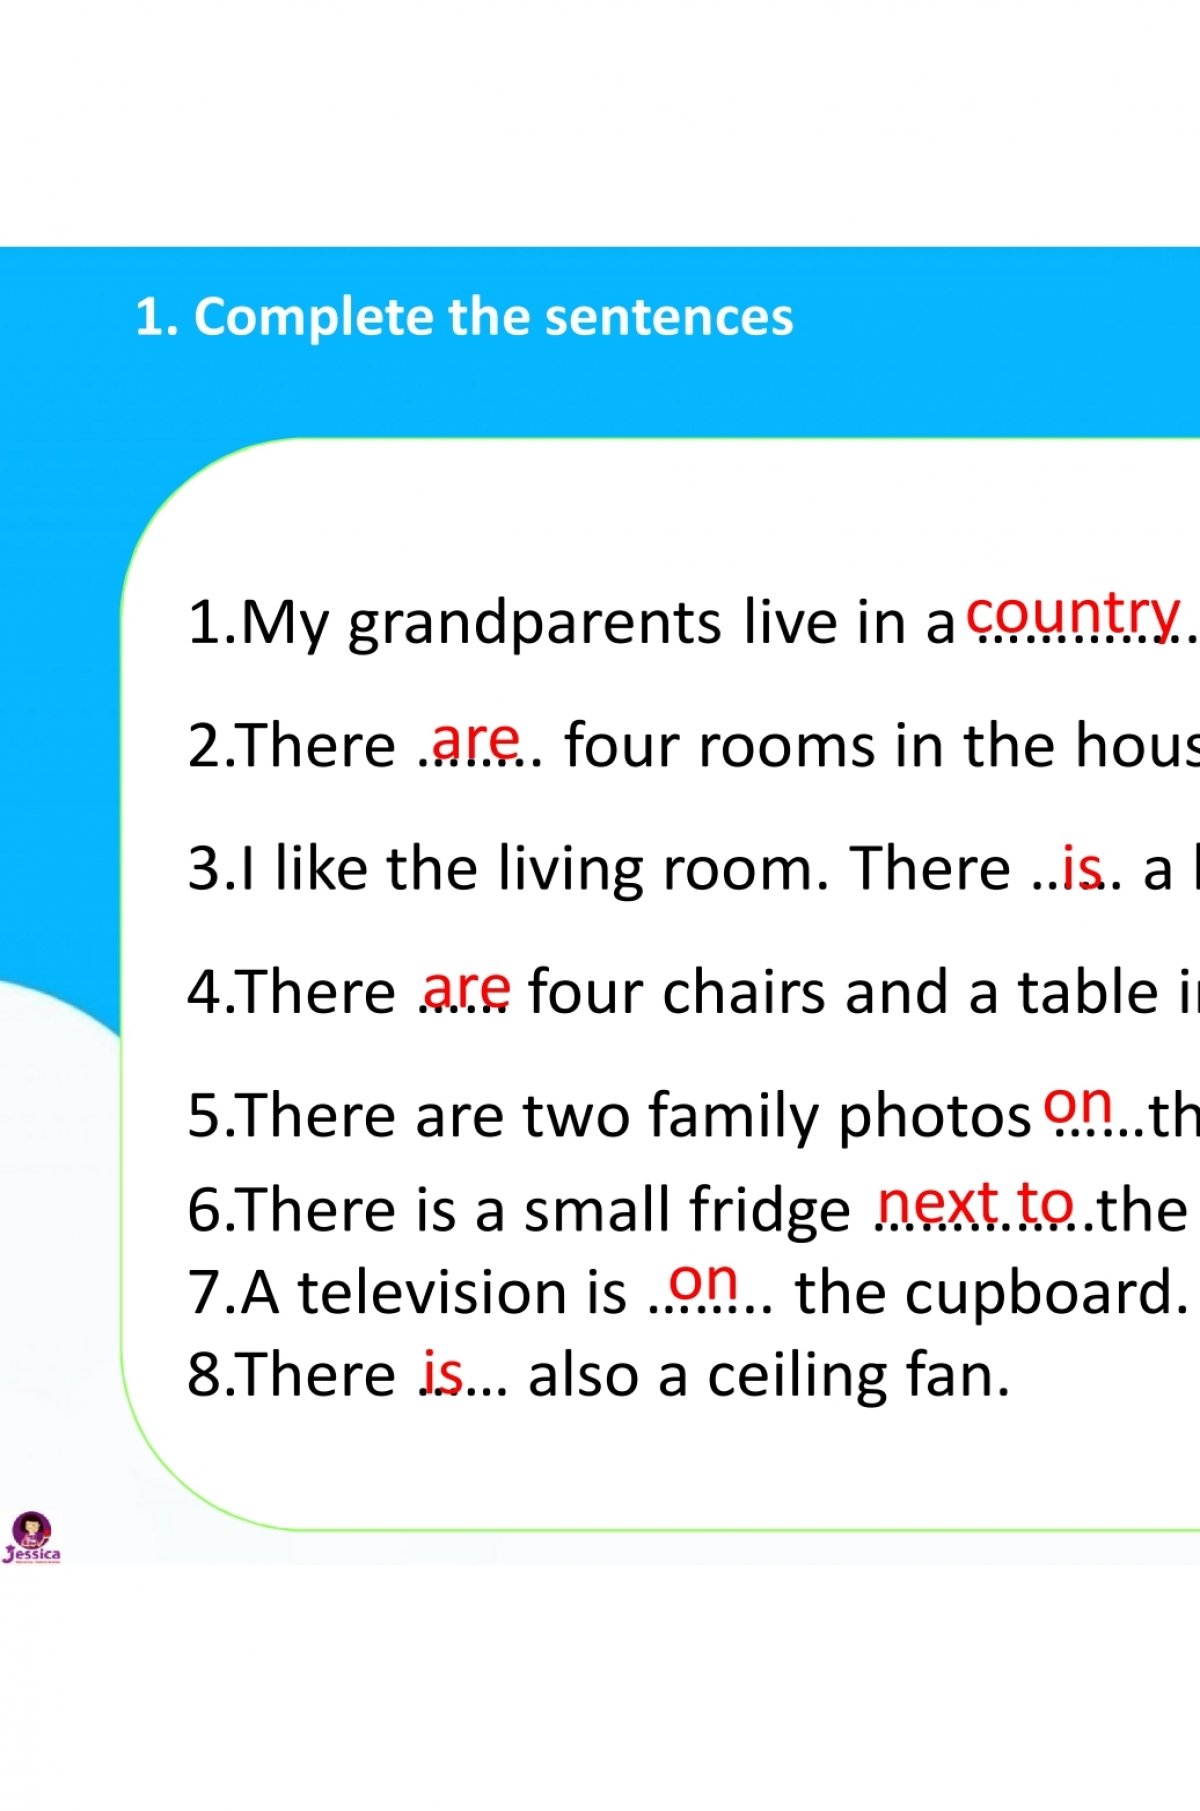 homework 216 t8 complete the sentences